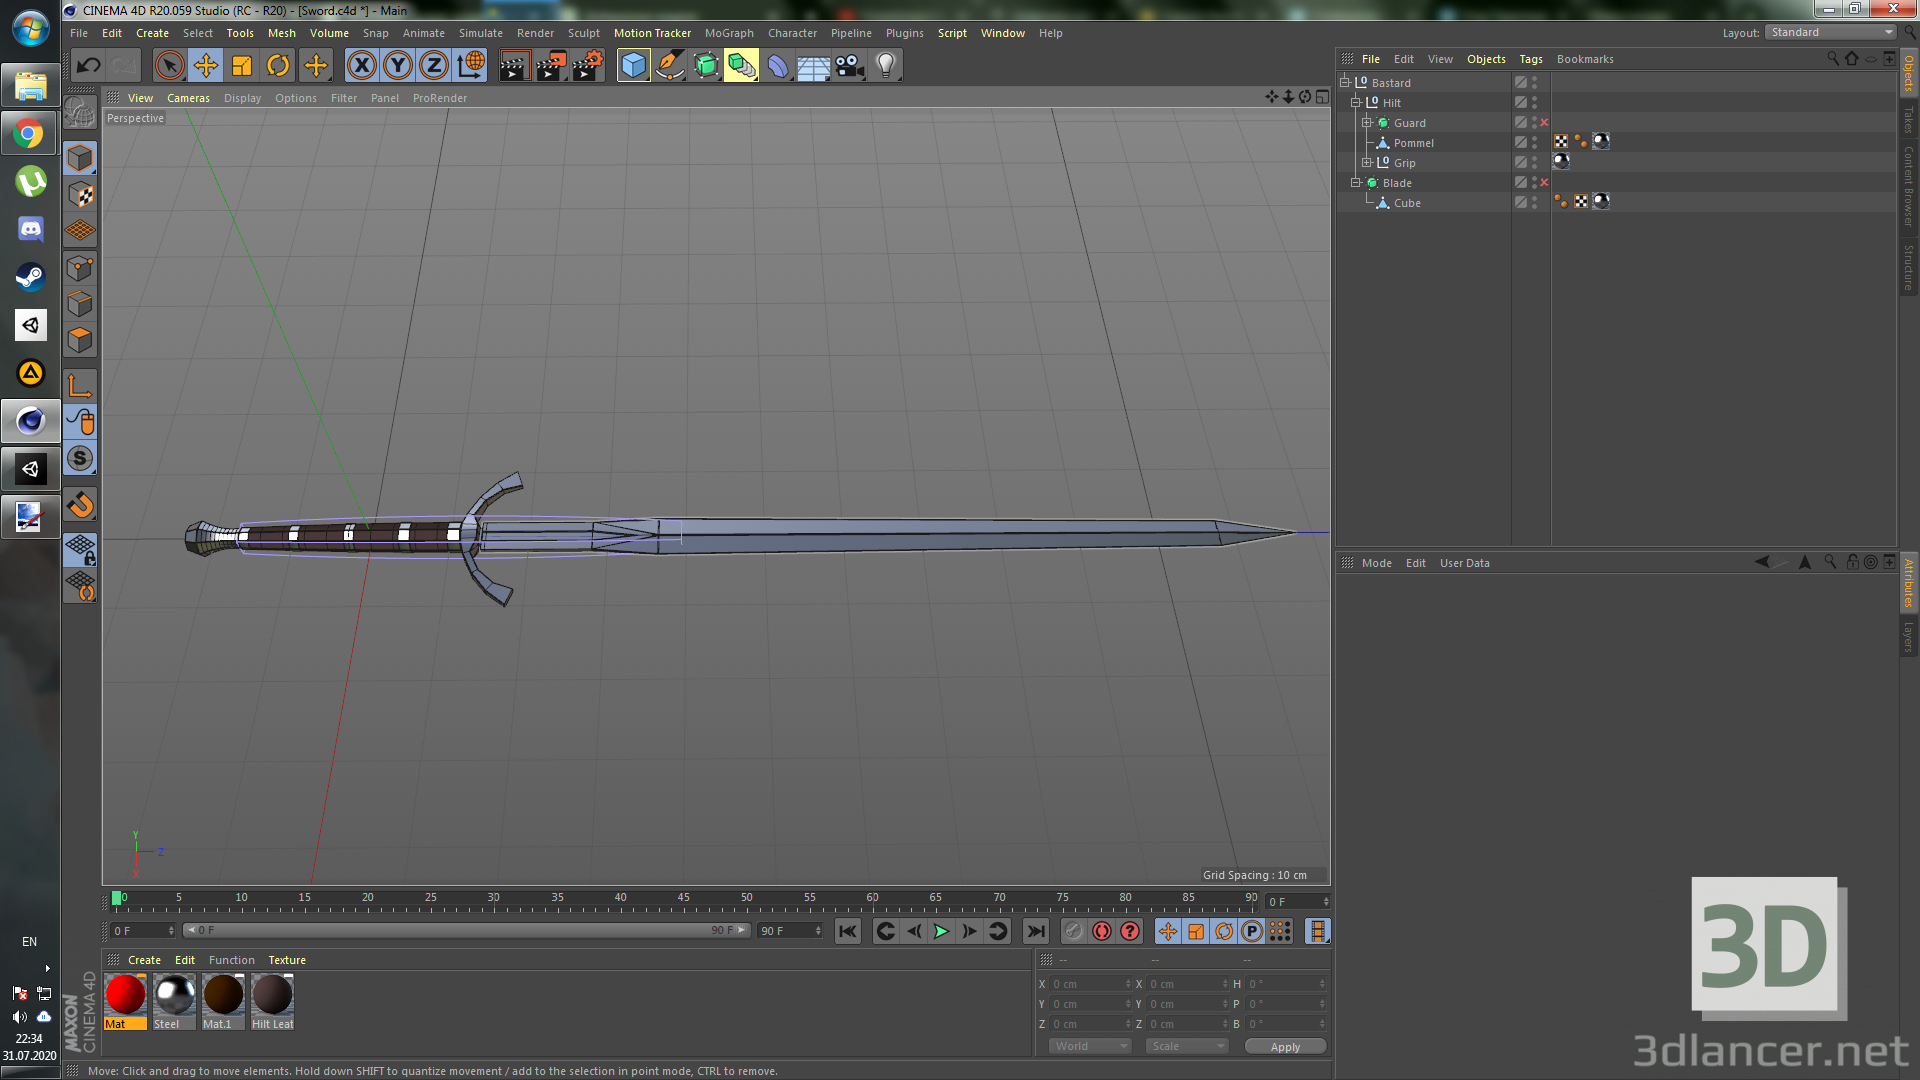 Espada - Bastardo 3D modelo Compro - render